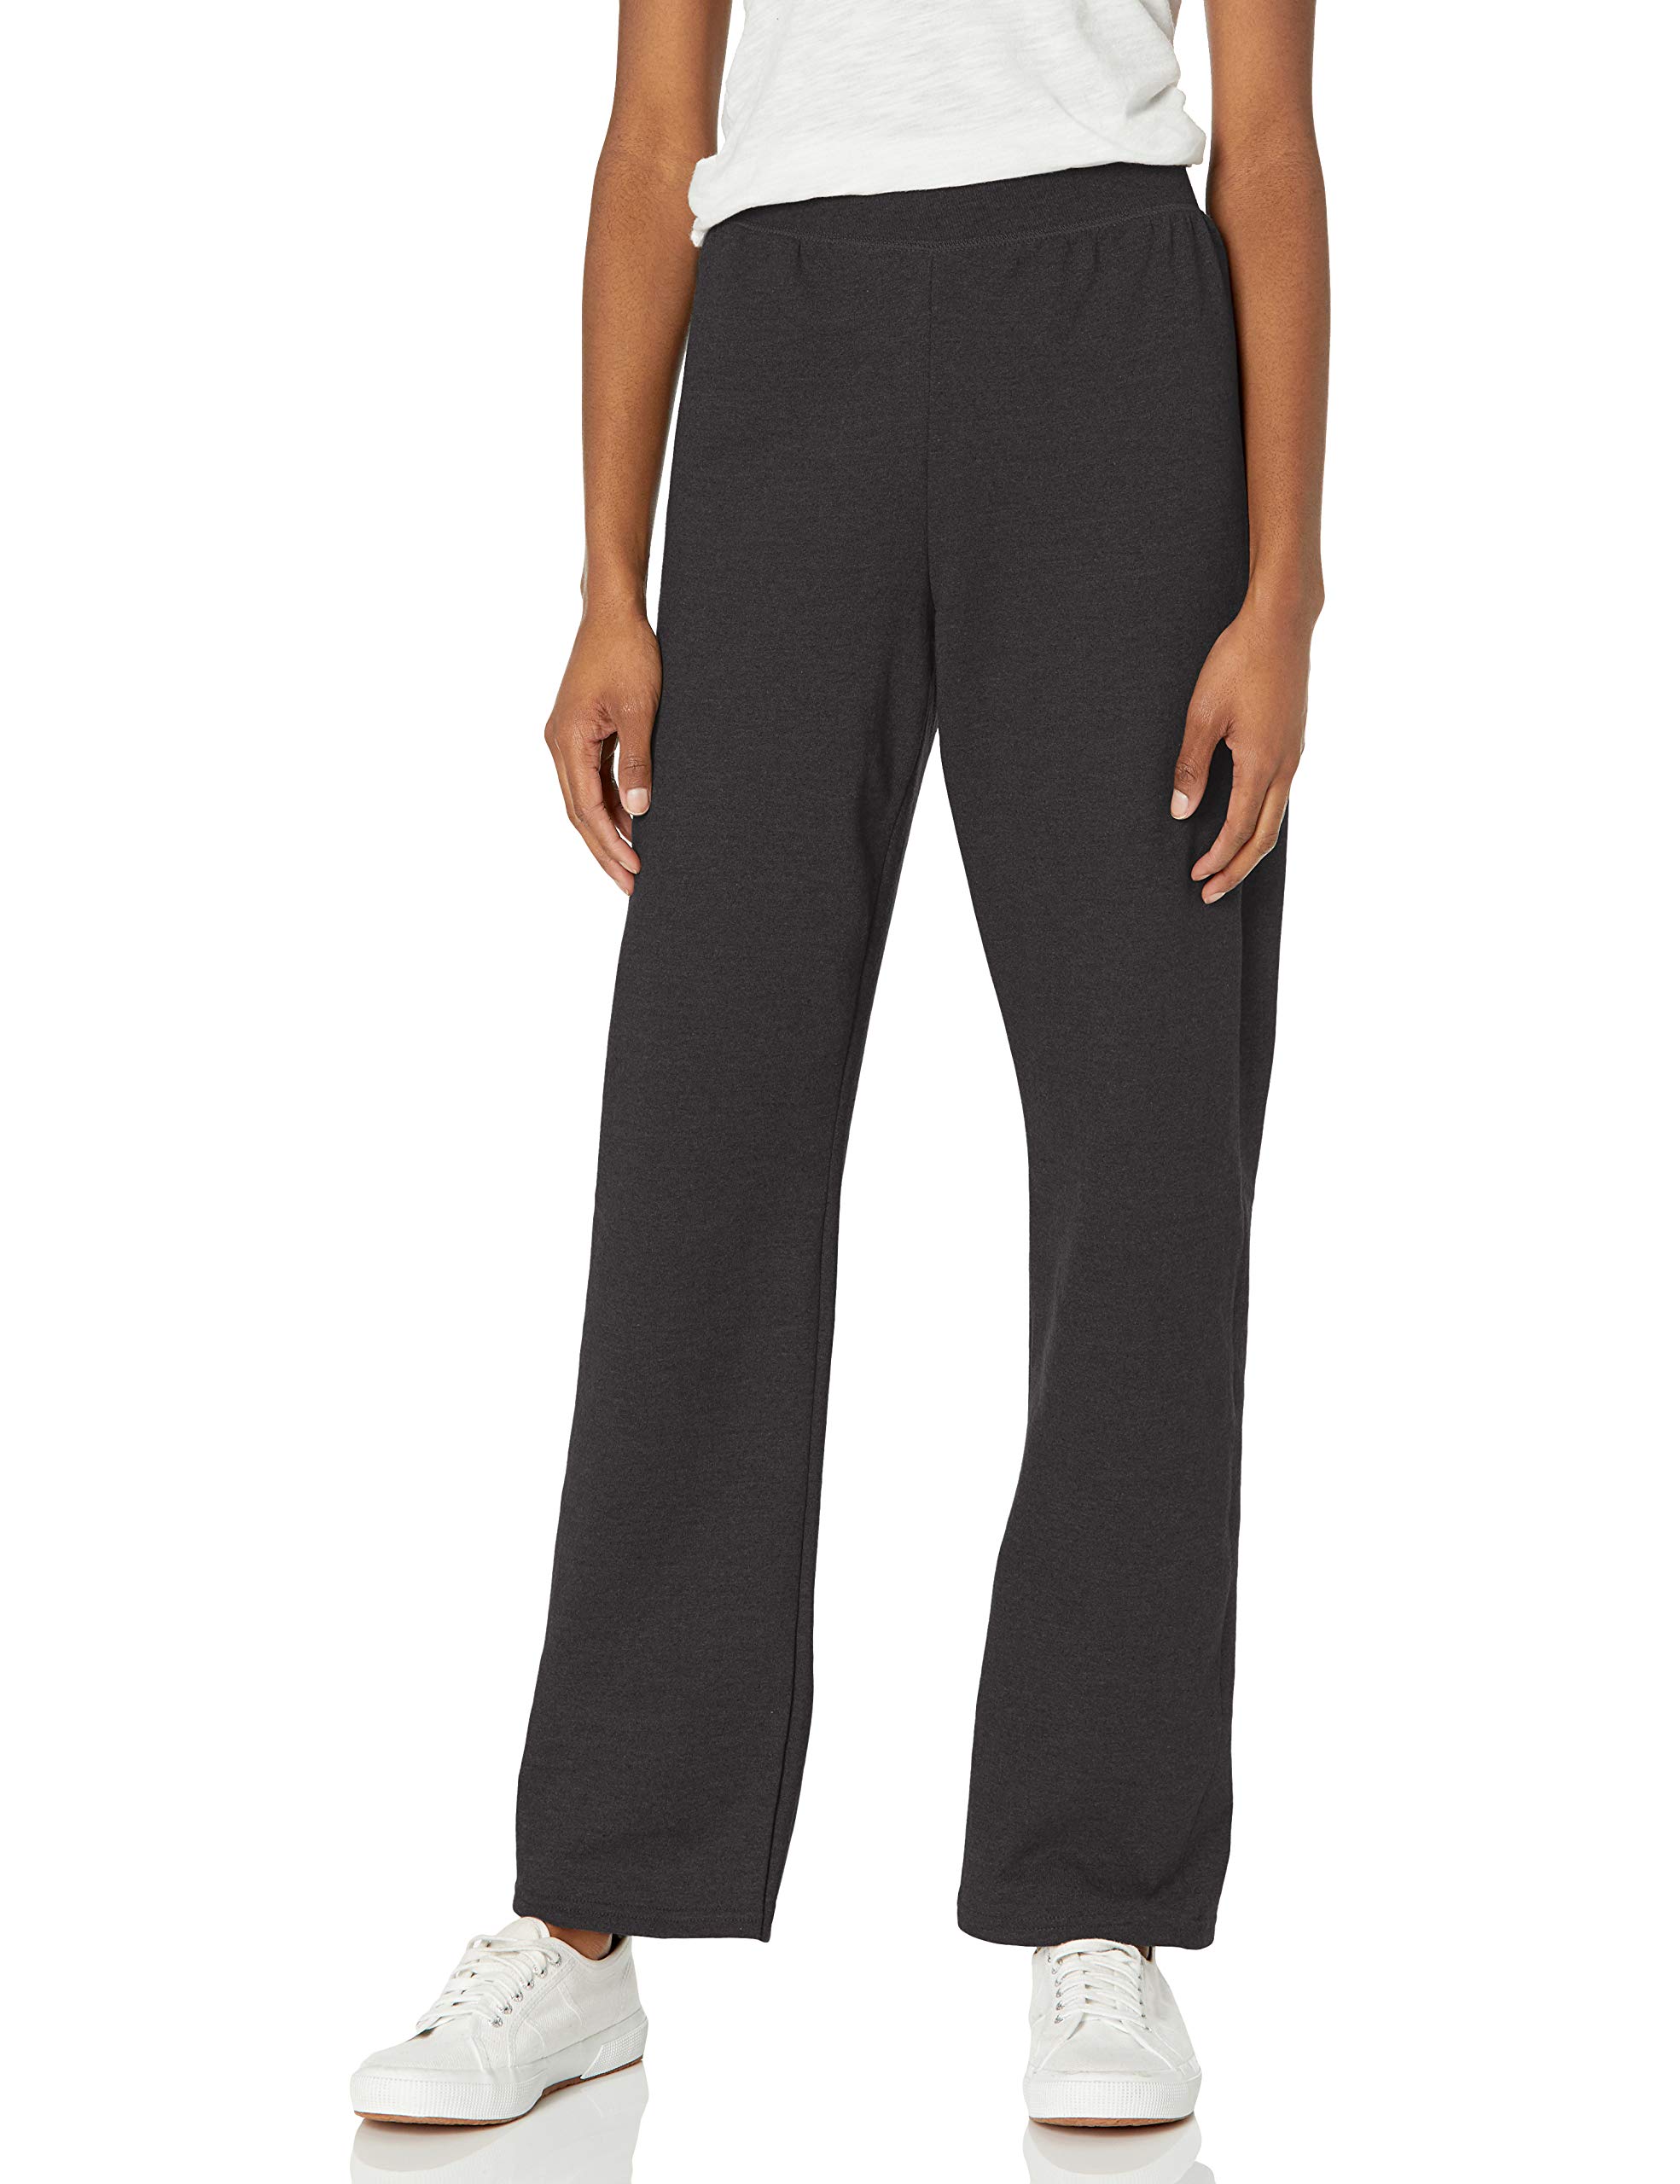 Hanes Women's EcoSmart Sweatpants $7.87